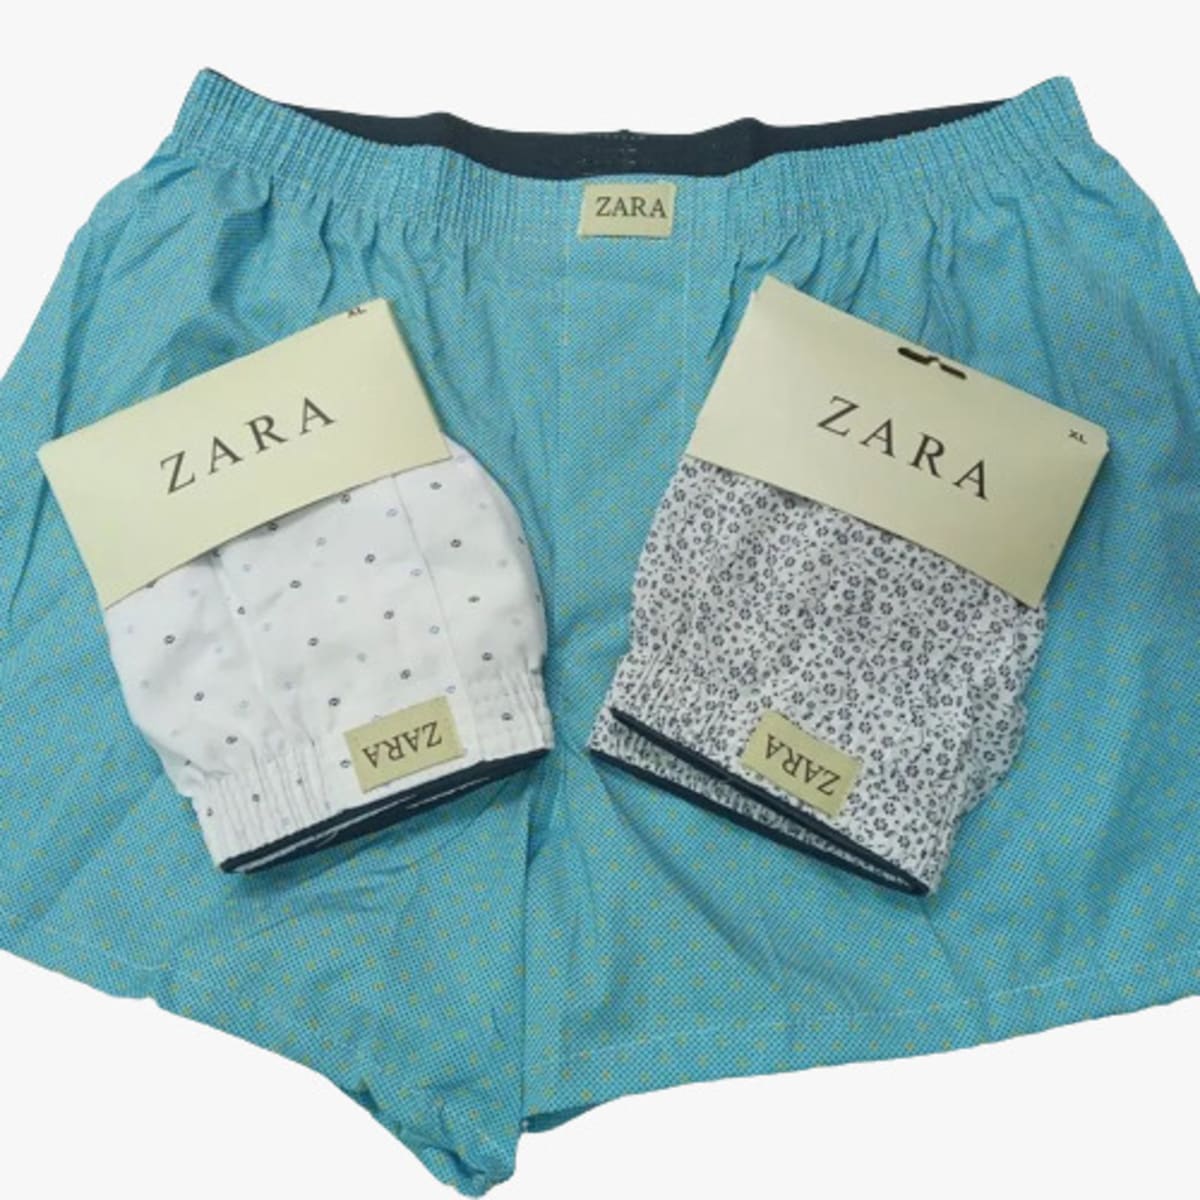 Zara 3-in-1 Men's Multicolored Boxers